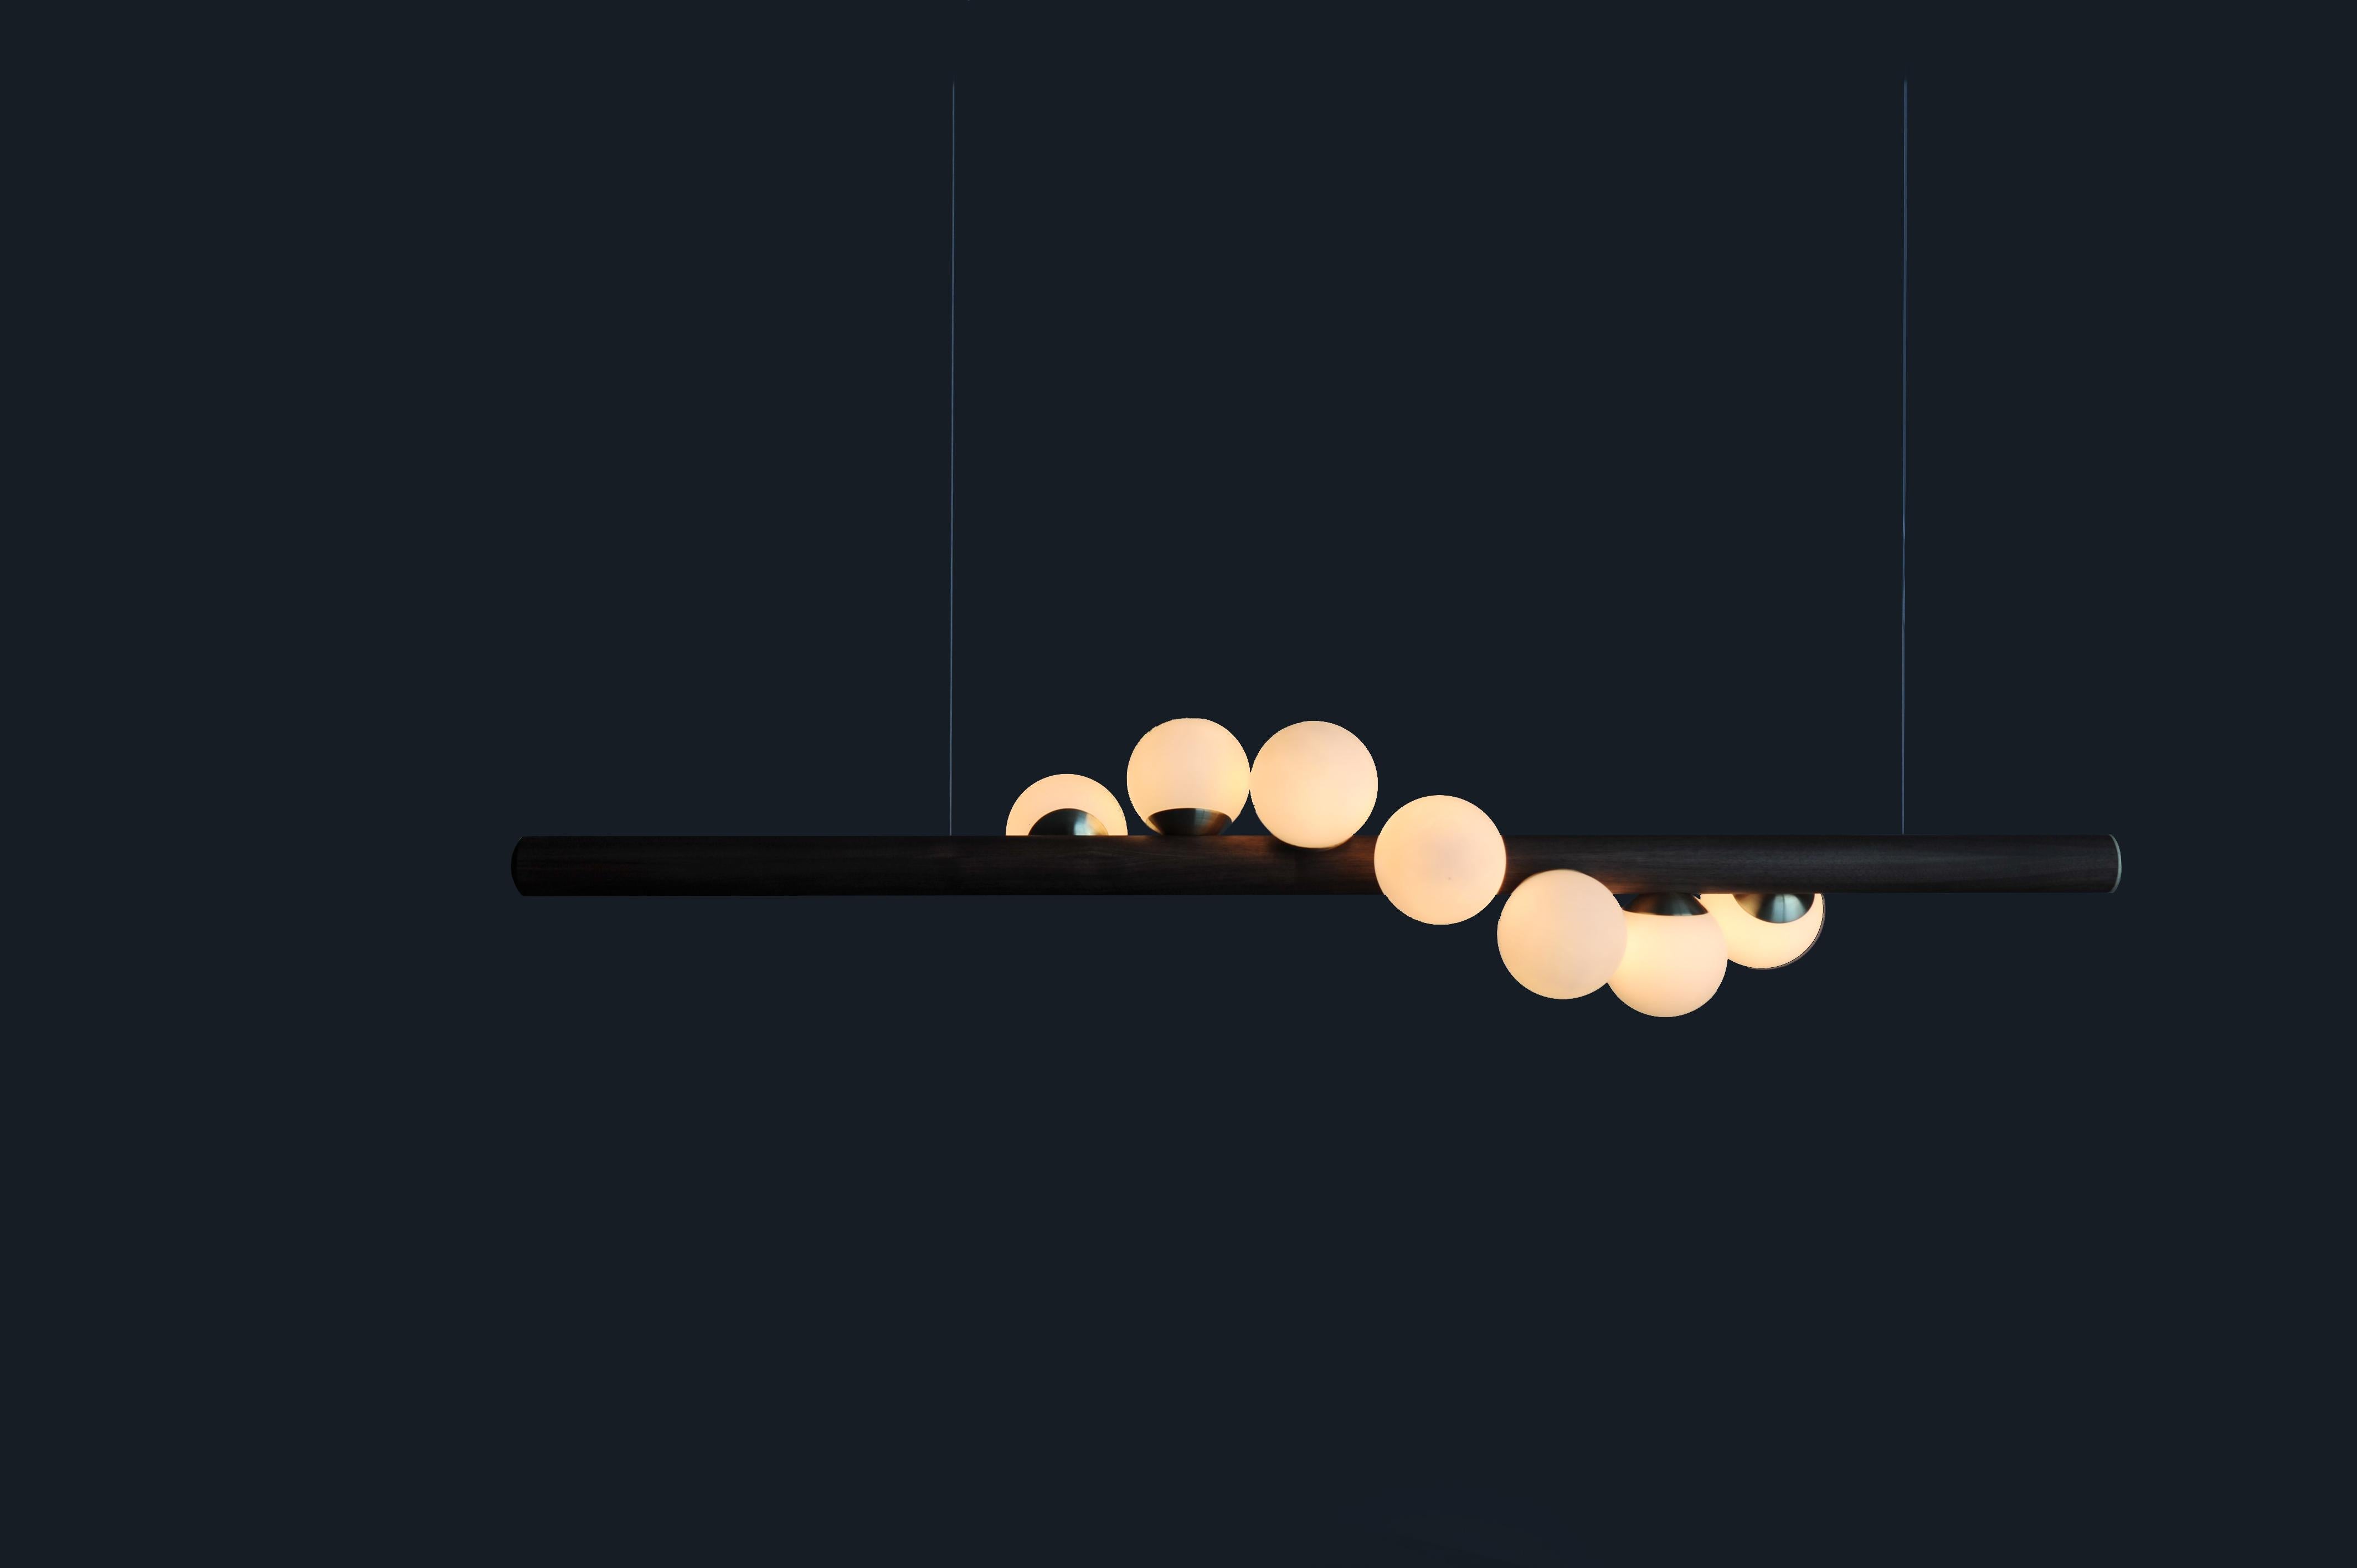 Black willow horizontal pendant light by Hollis & Morris
2019
Dimensions: 5ft - length 60” x diameter 2.25” 
Materials: Oak black, spun brass, hand blown glass

Options available:
Wood: W. oak white, w. oak natural, with oak black, walnut
3ft - 36”